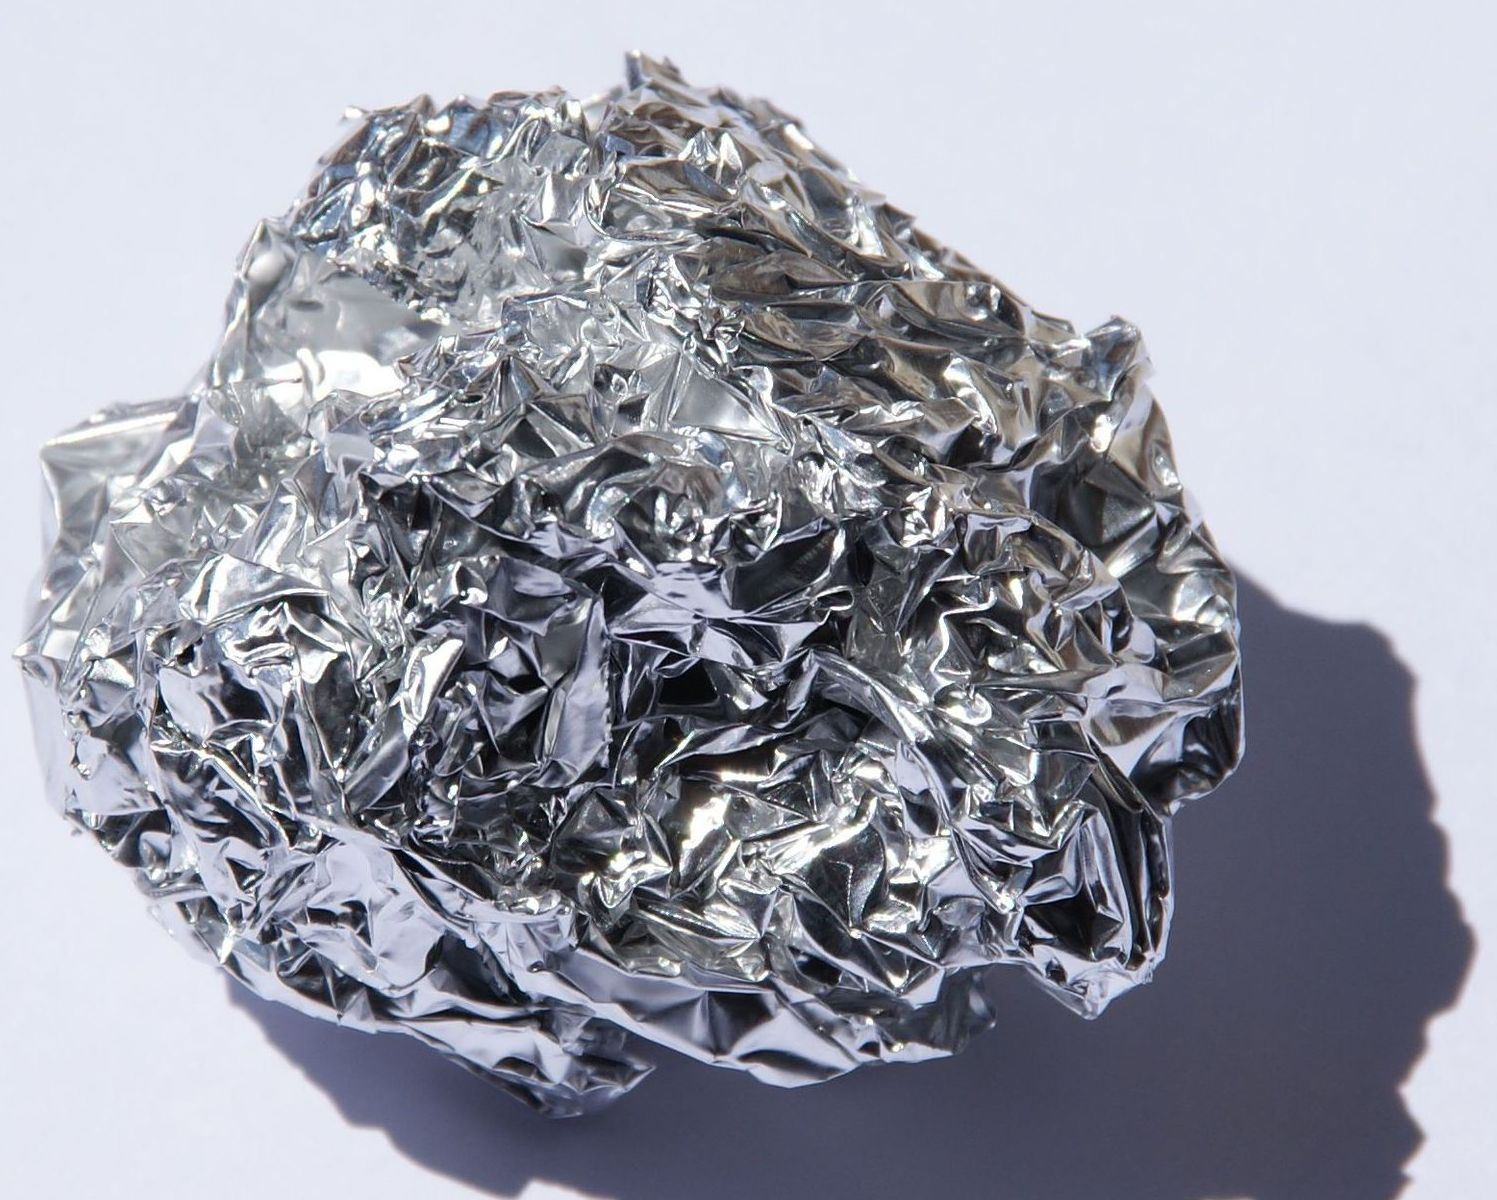 Дюраль алюминий сплав. Алюминий хим элемент. Сплавы алюминий-медь-кремний. Алюминий a5n. Алюминий легче железа